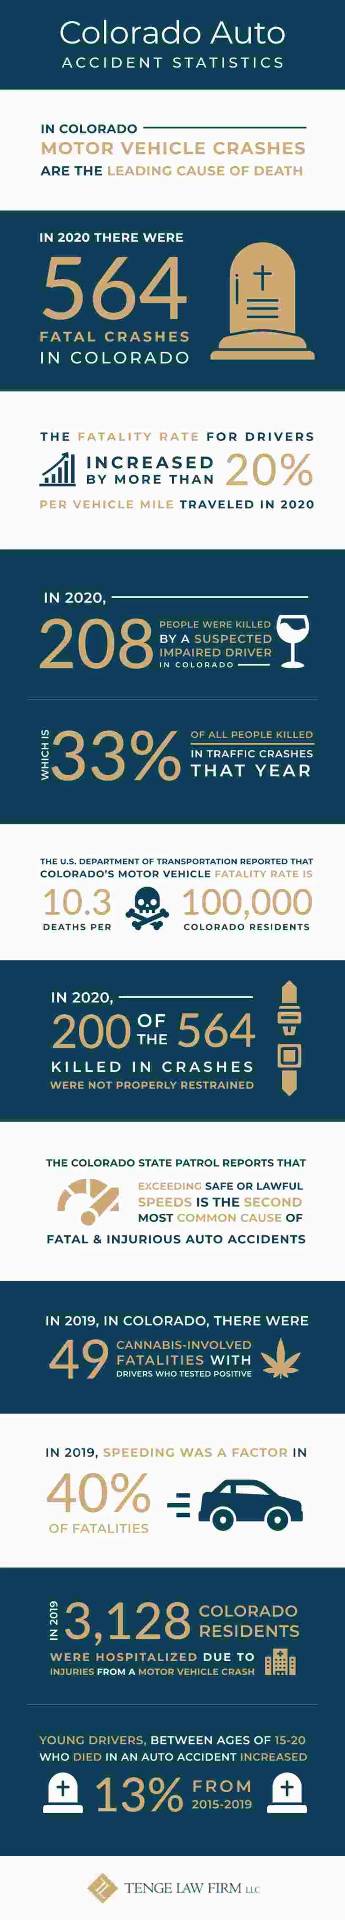 Colorado-Auto-Accident-Statistics-Tenge-Law-Firm-768x4276.png